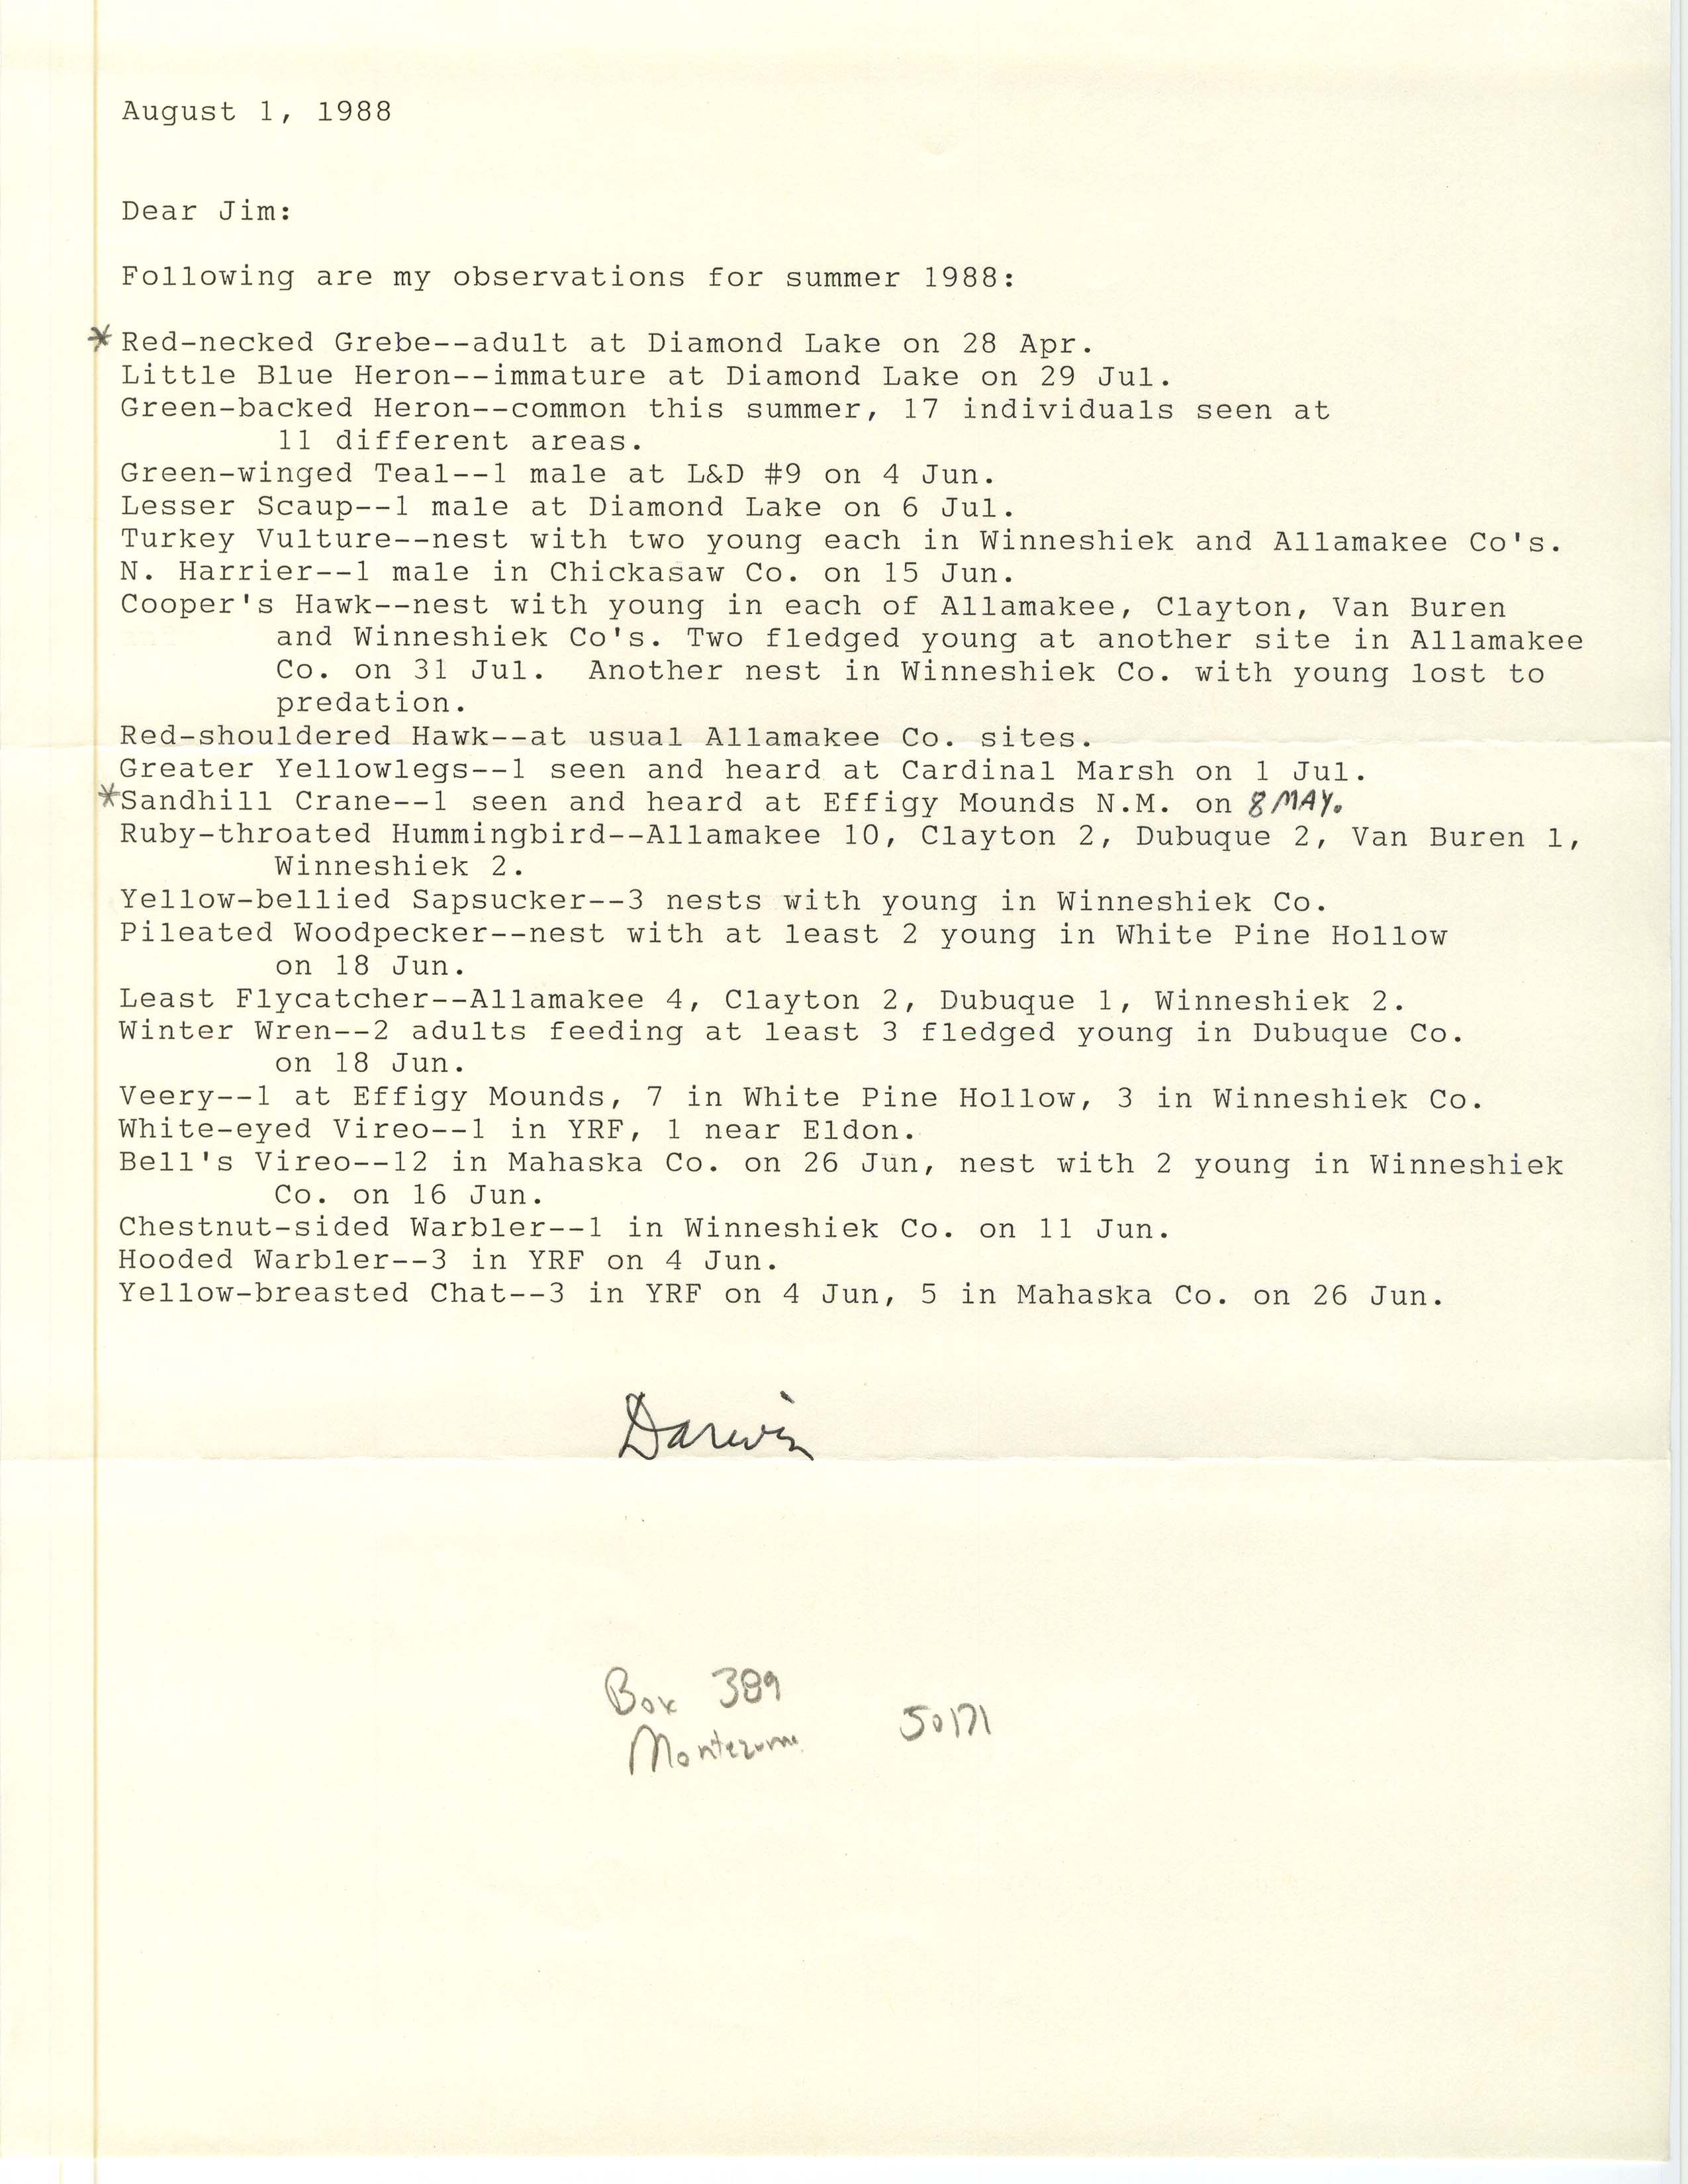 Darwin Koenig letter to James J. Dinsmore regarding bird sightings, August 1, 1988